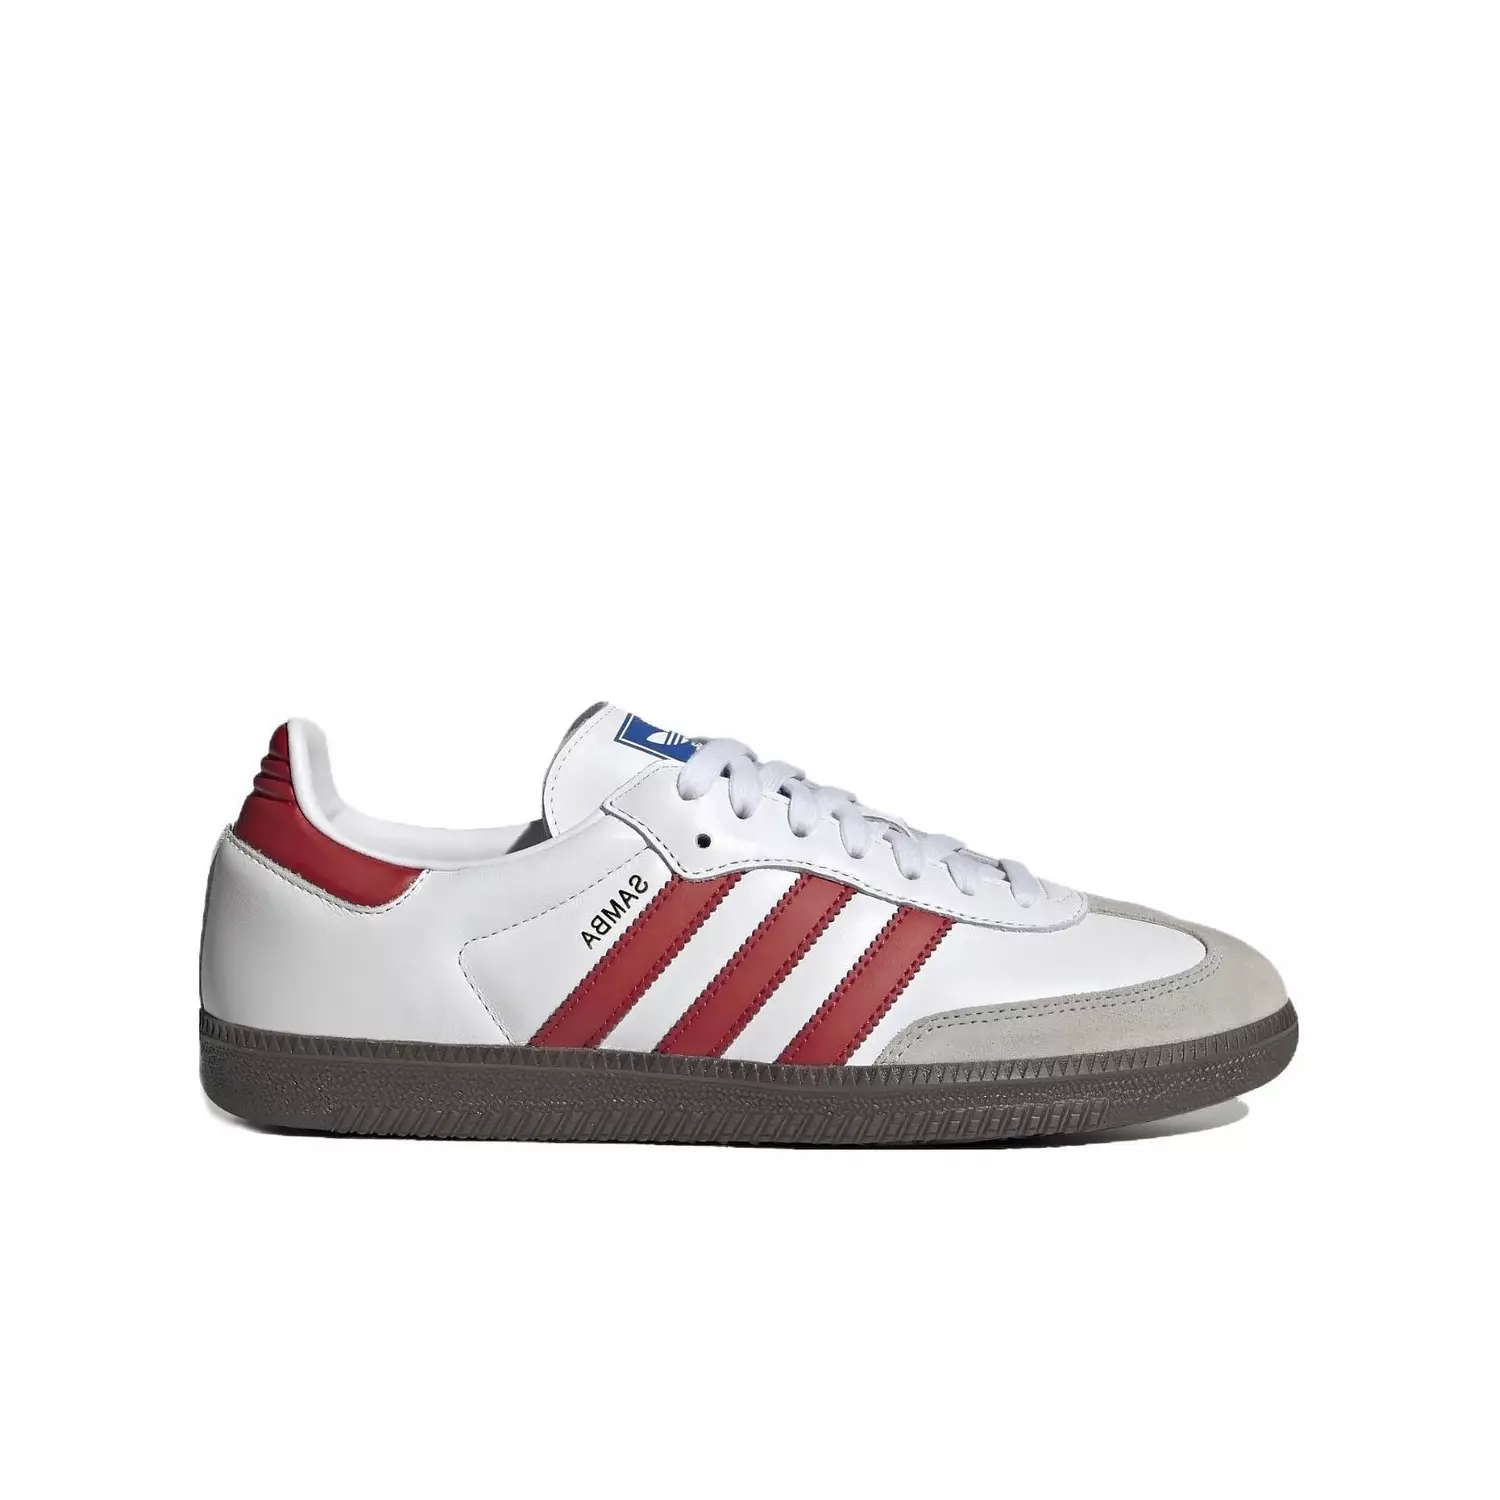 Adidas Samba OG ‘White Sacrlet’ hover image